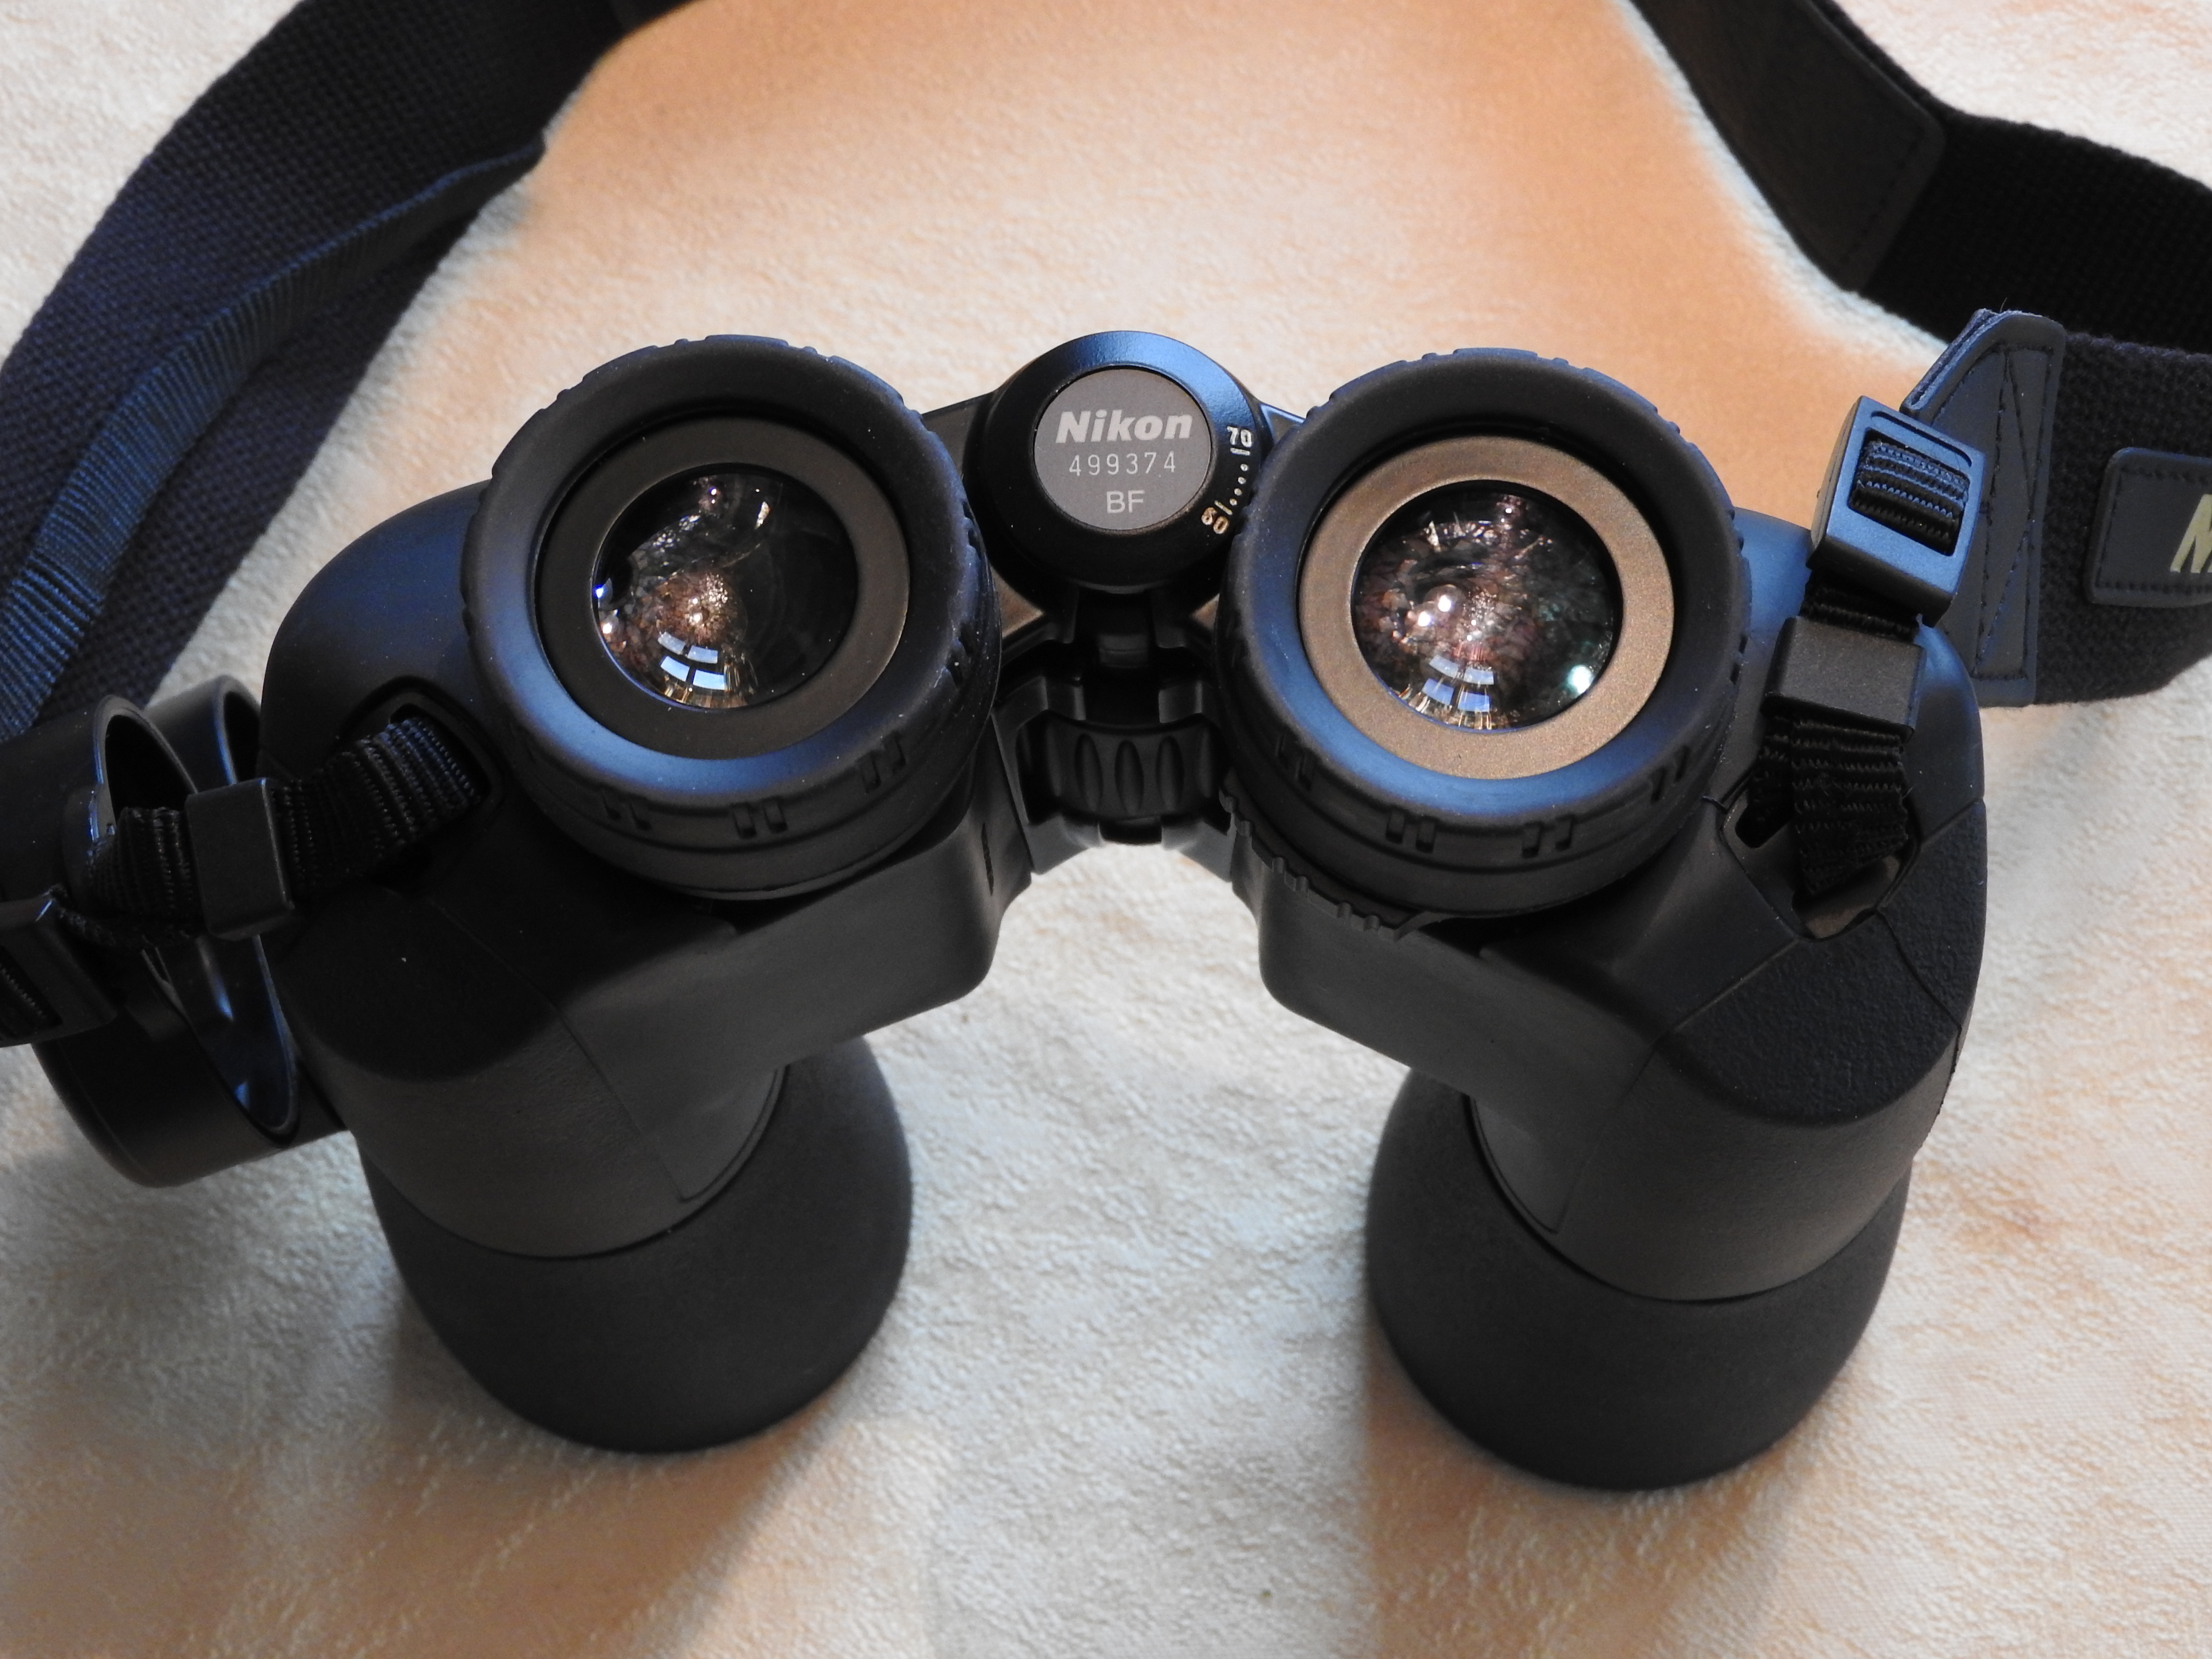 Nikon 双眼鏡 アクションEX 10X50CF ポロプリズム式 10倍50口径